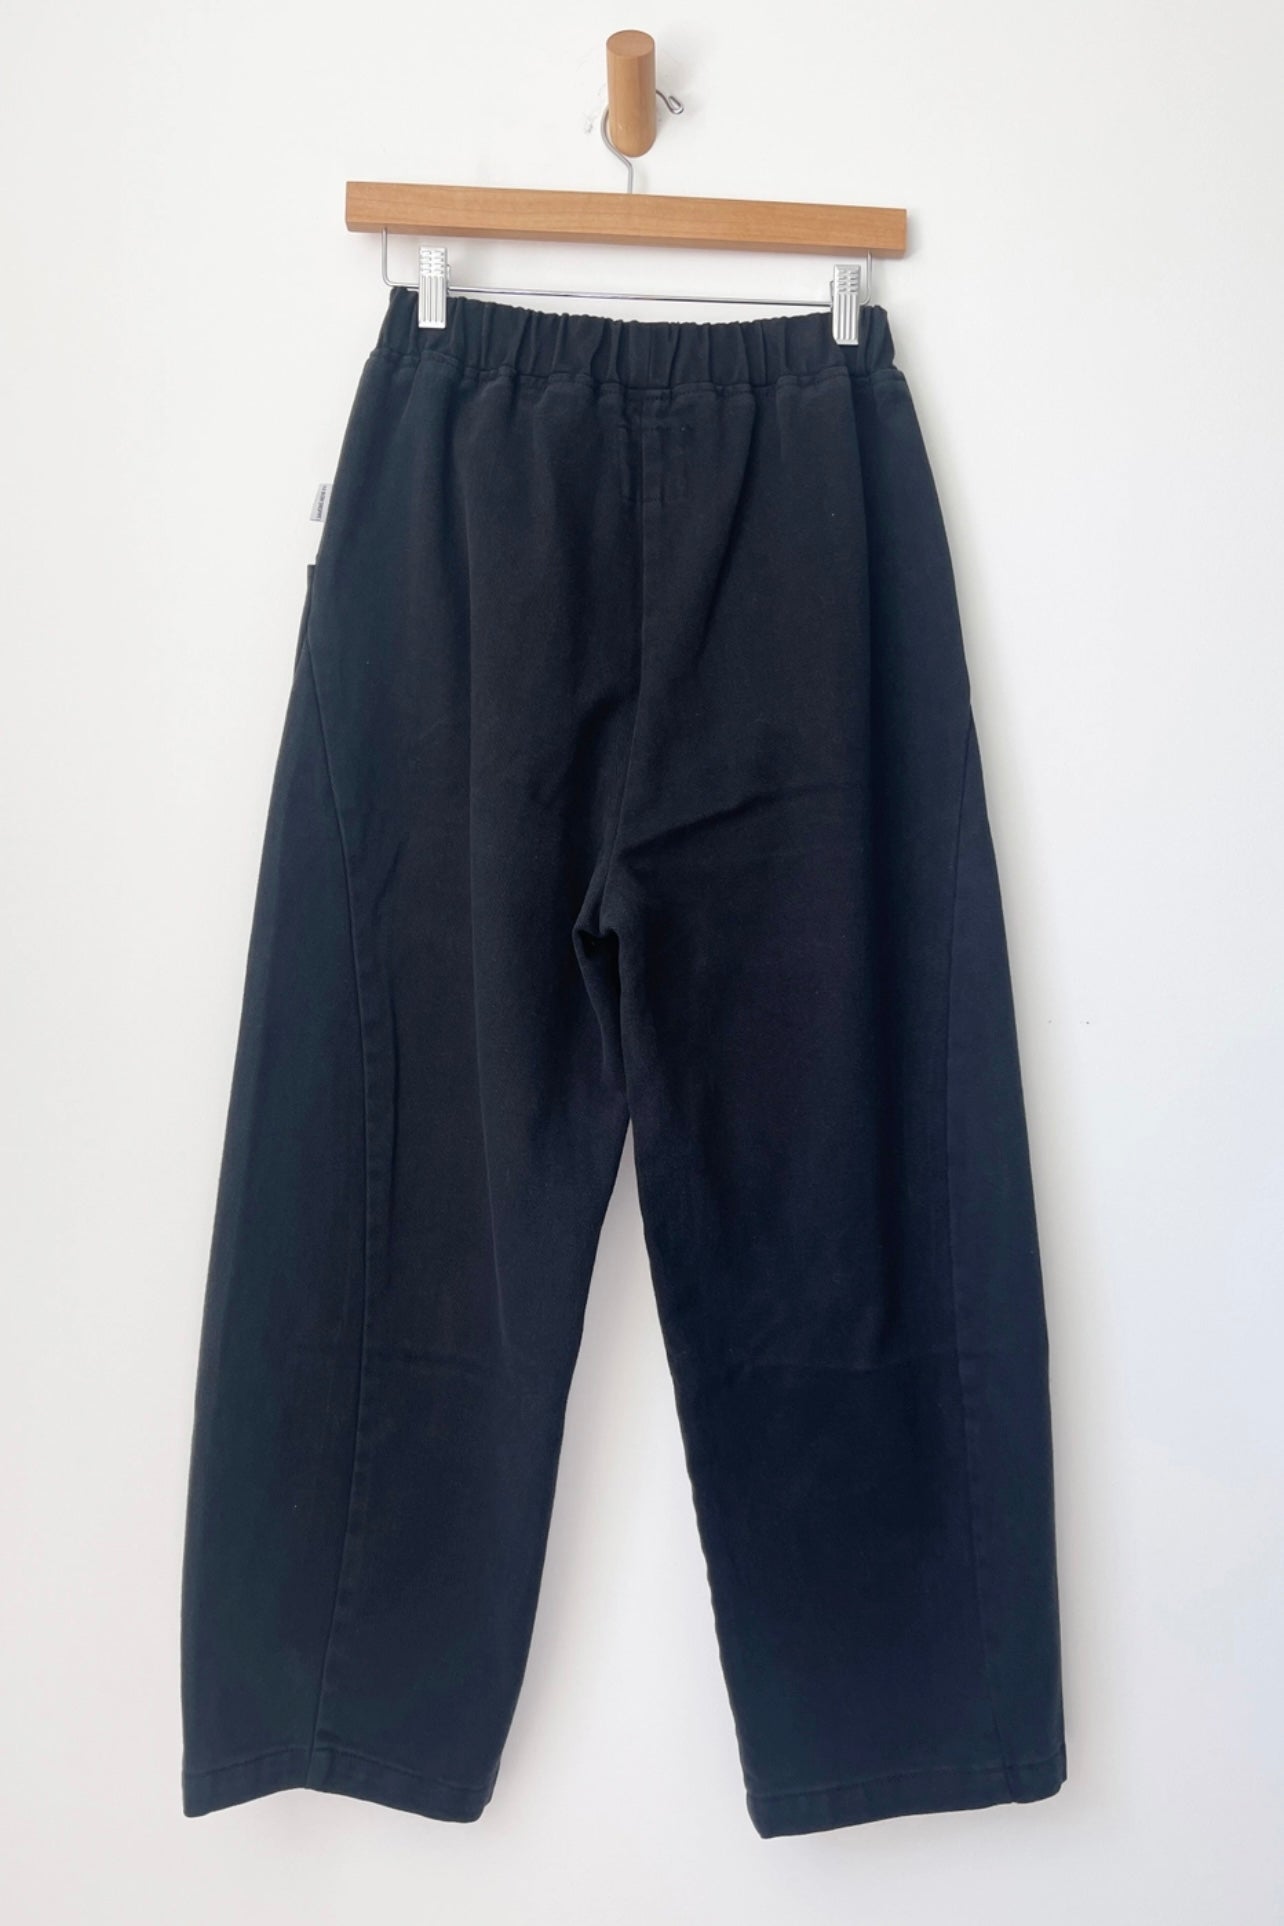 Le Bon Shoppe Arc Pants in BLACK - ( select size )